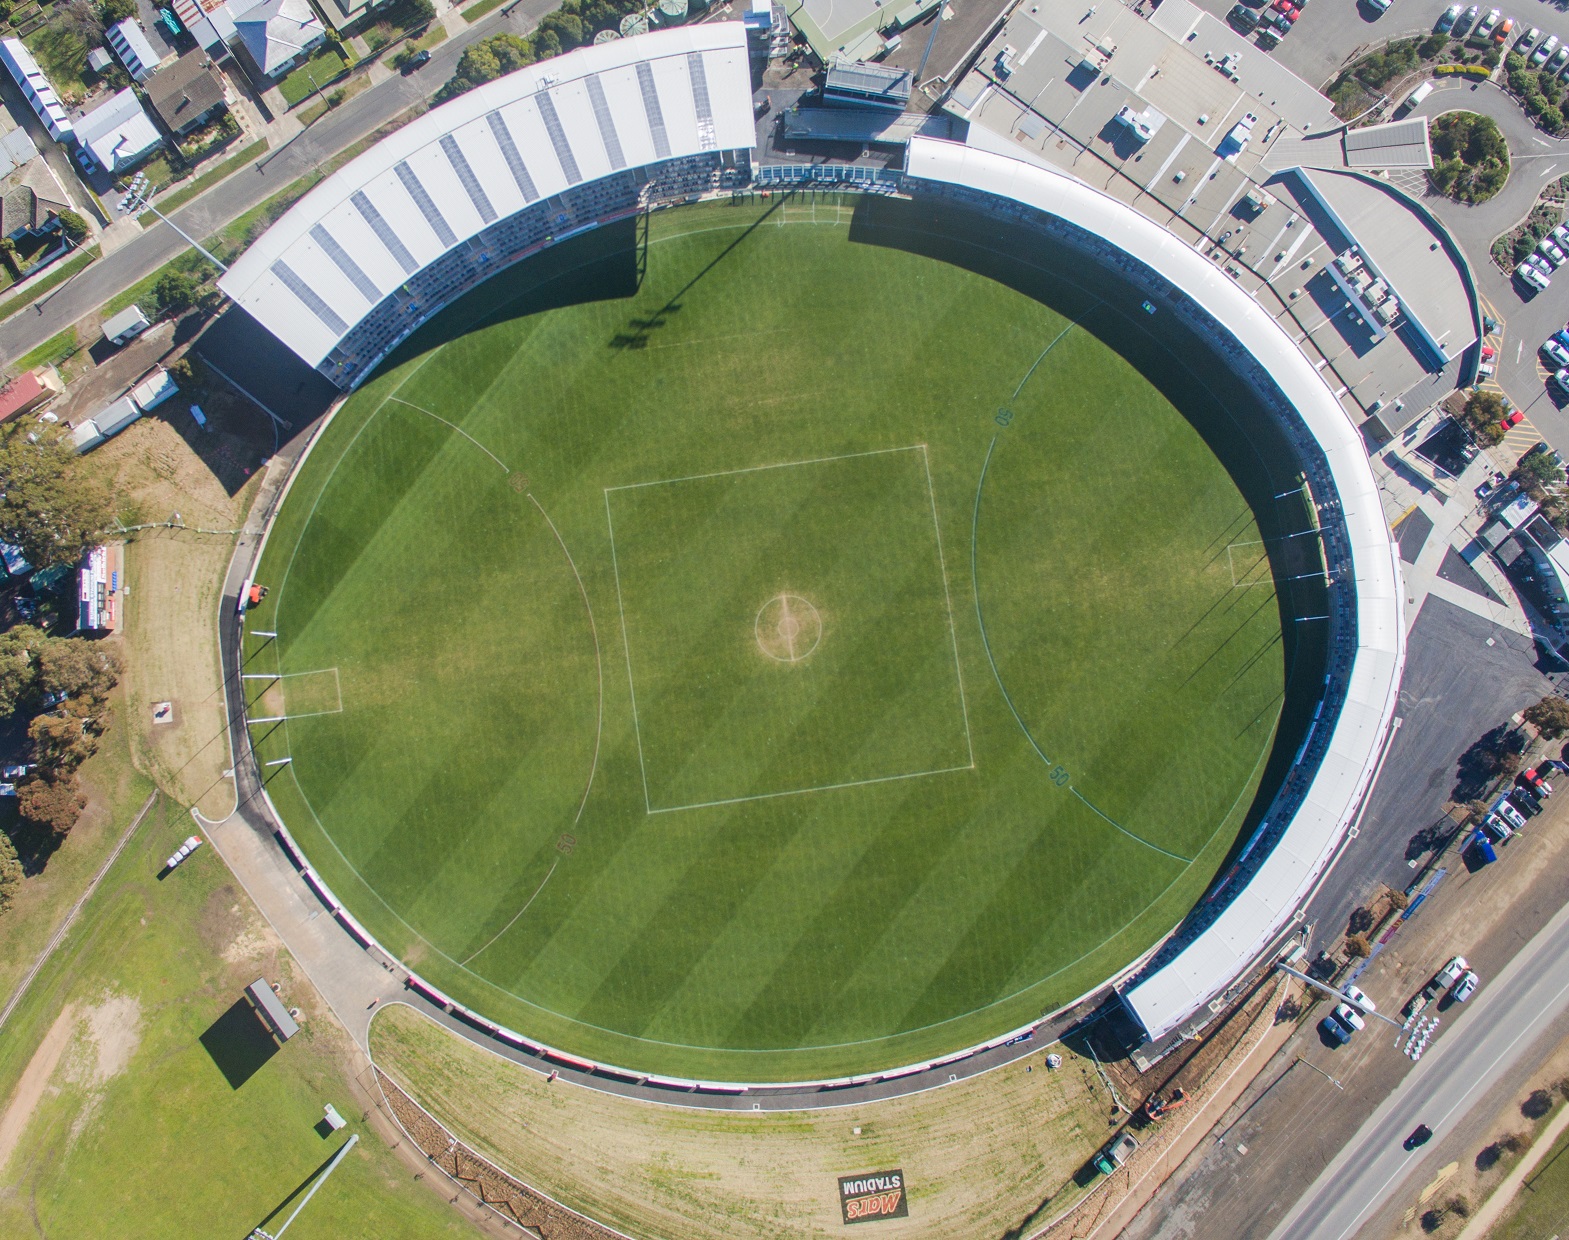 Mars Stadium, Ballarat, shown from the air